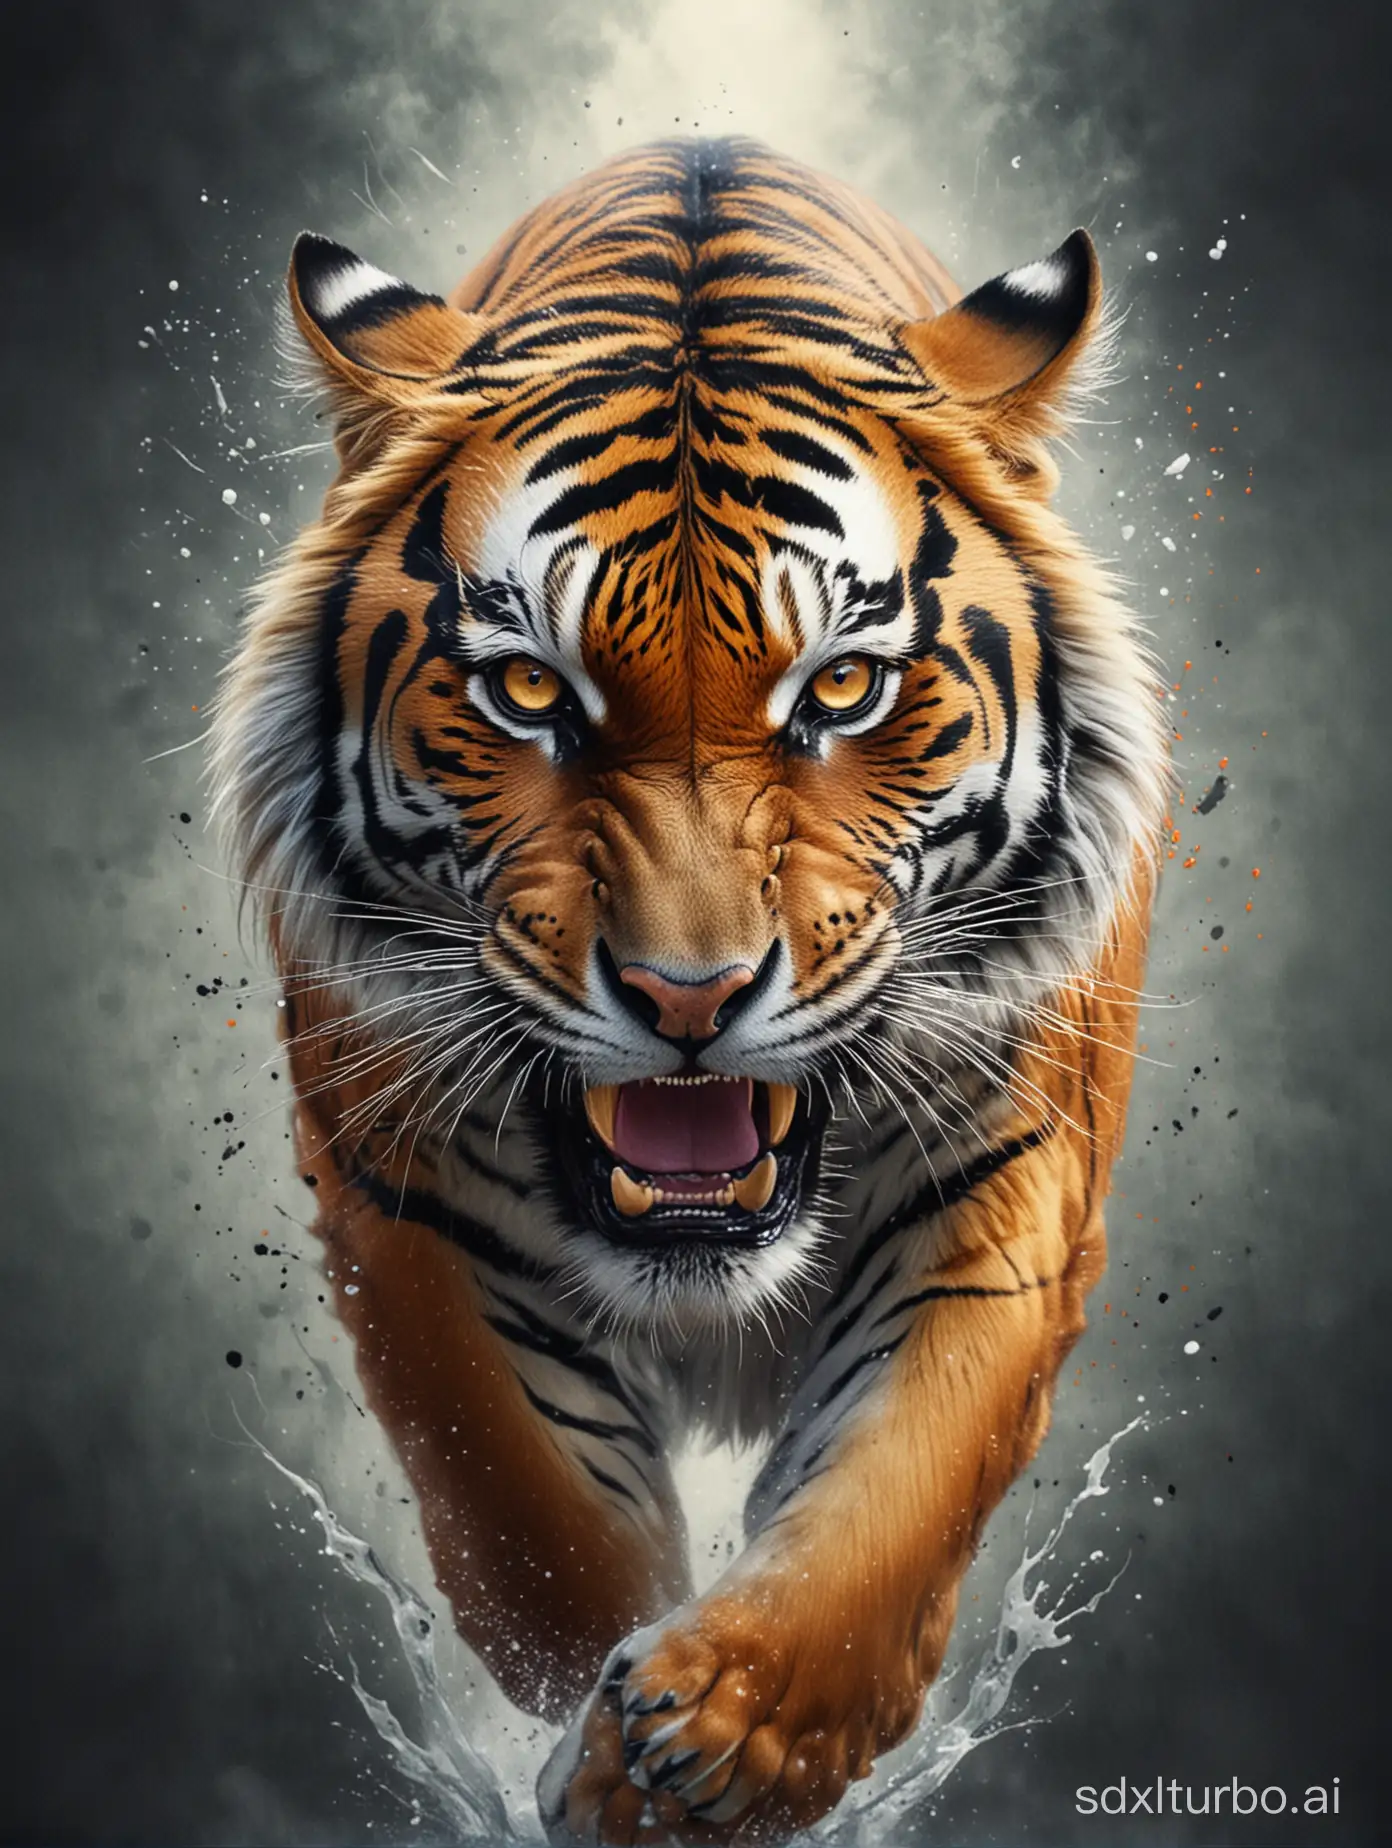 The fierce tiger